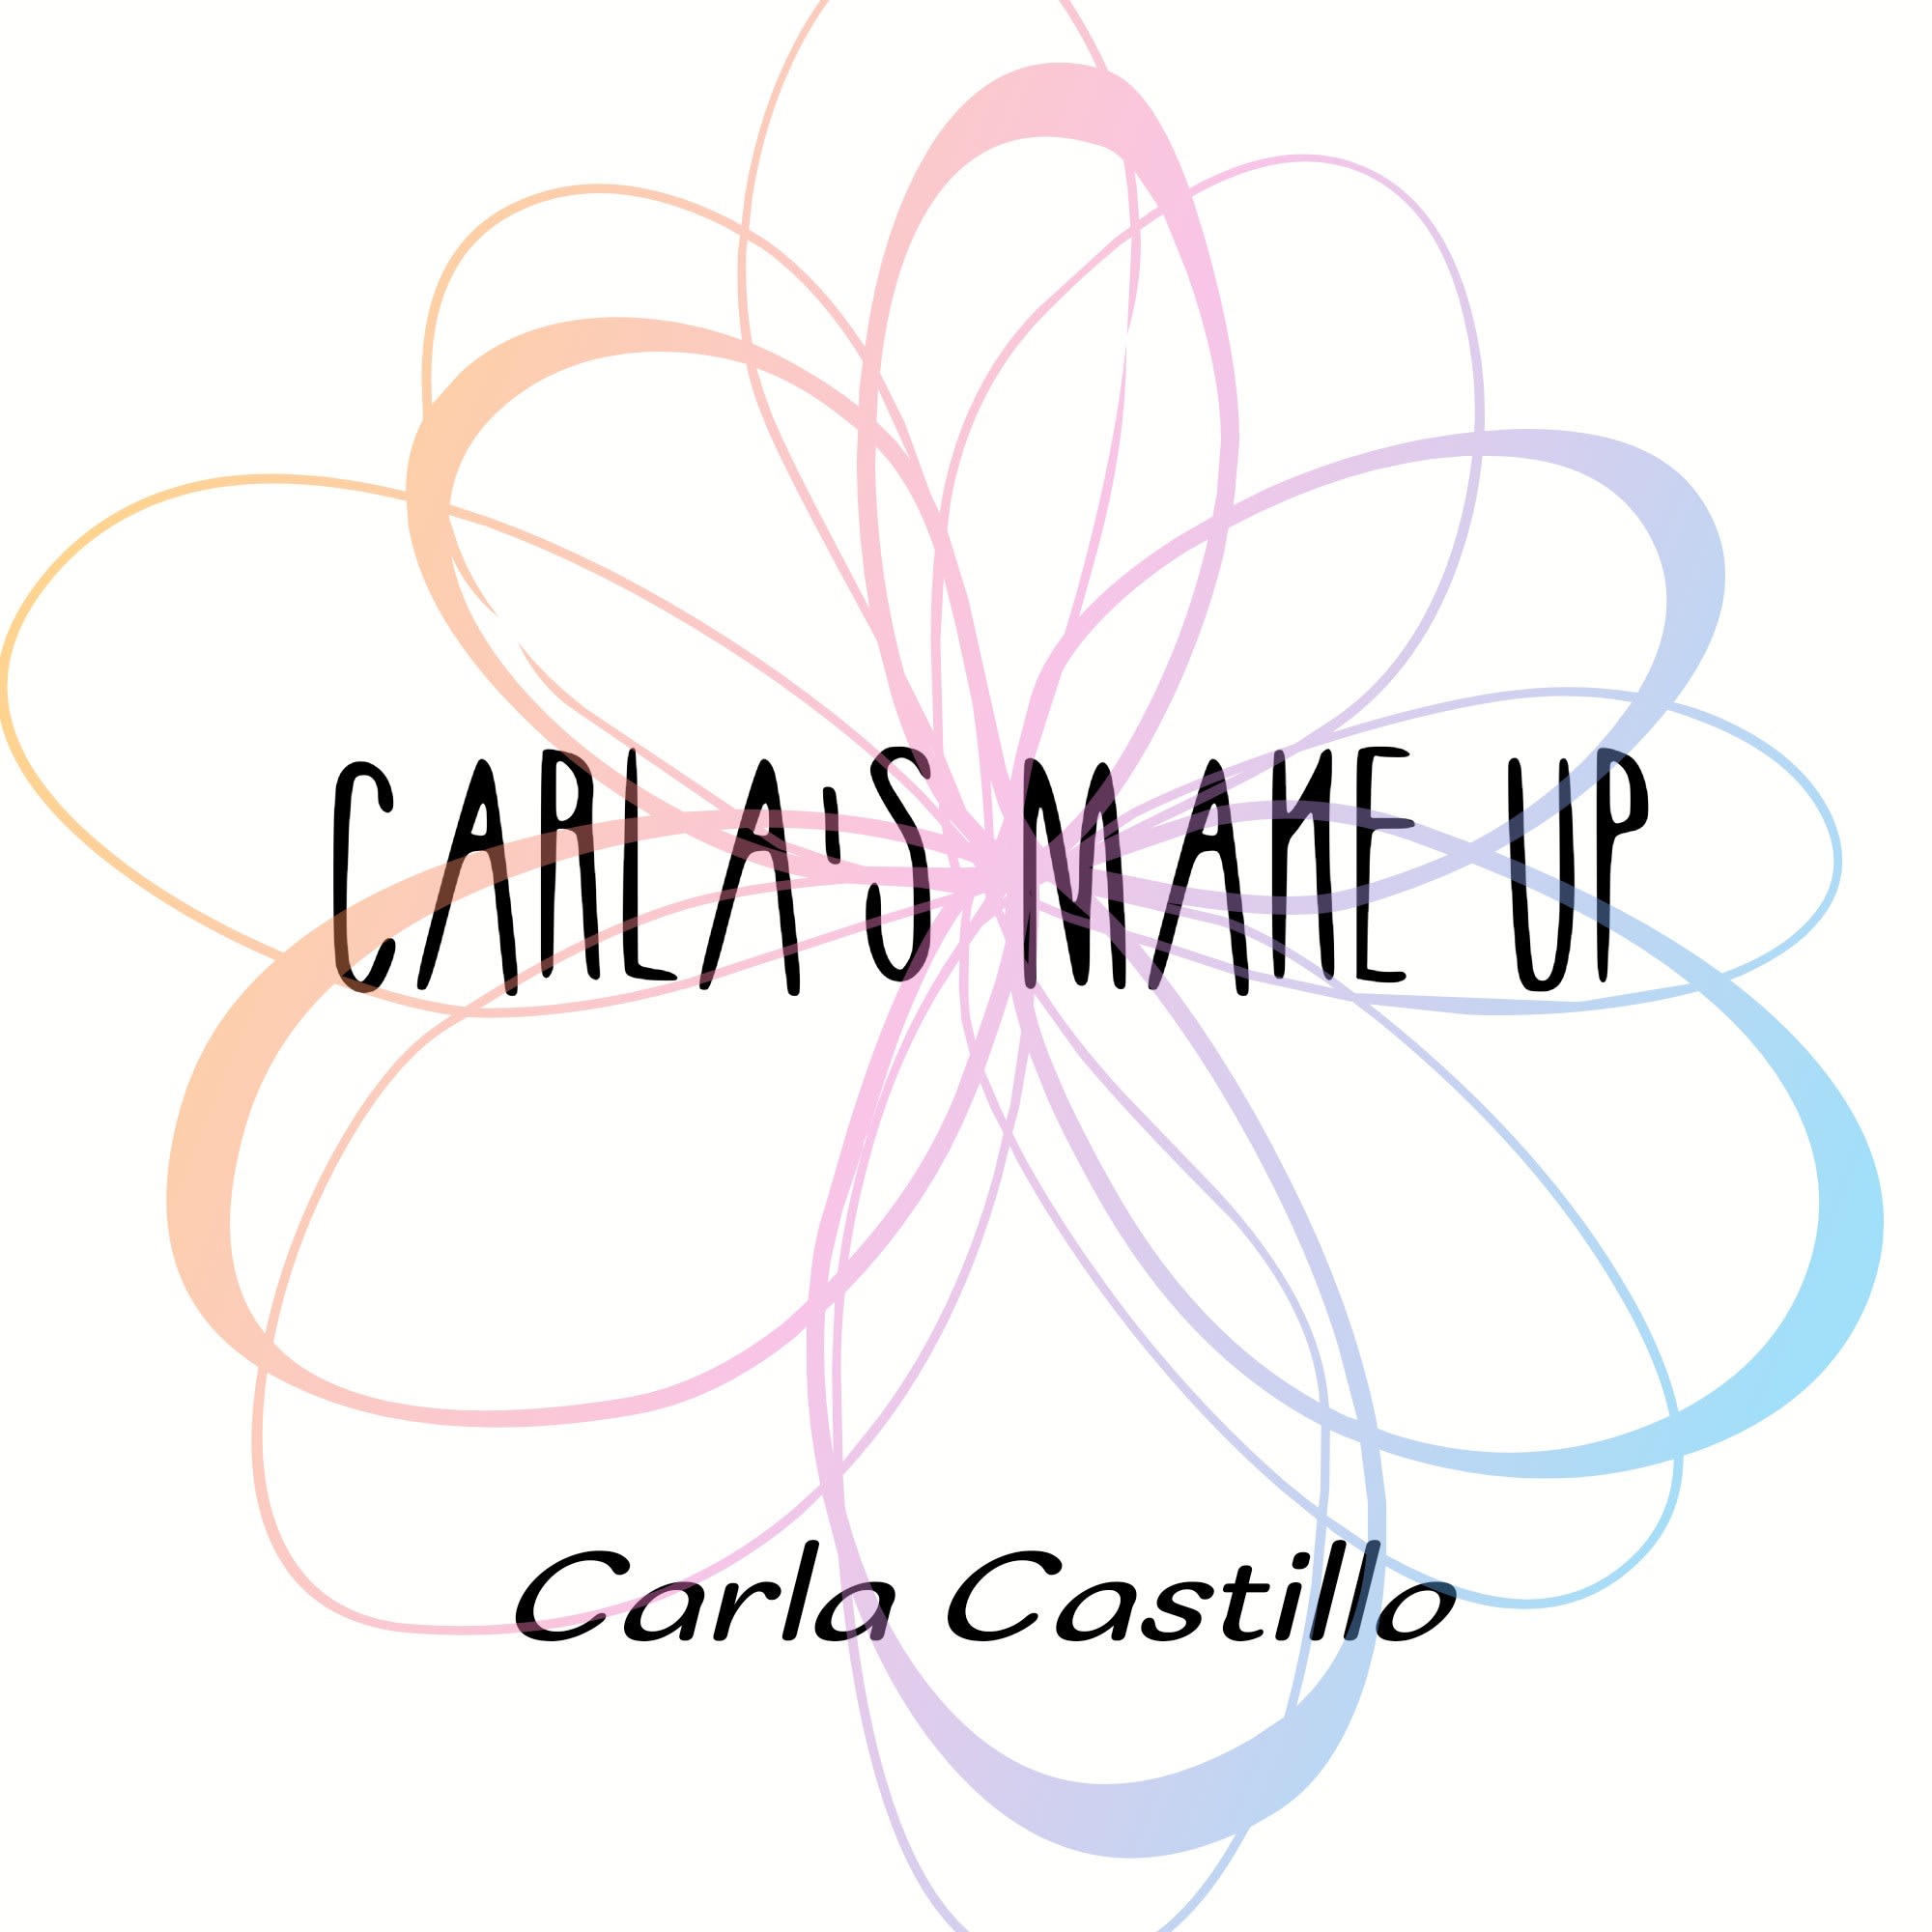 Carla's Make Up